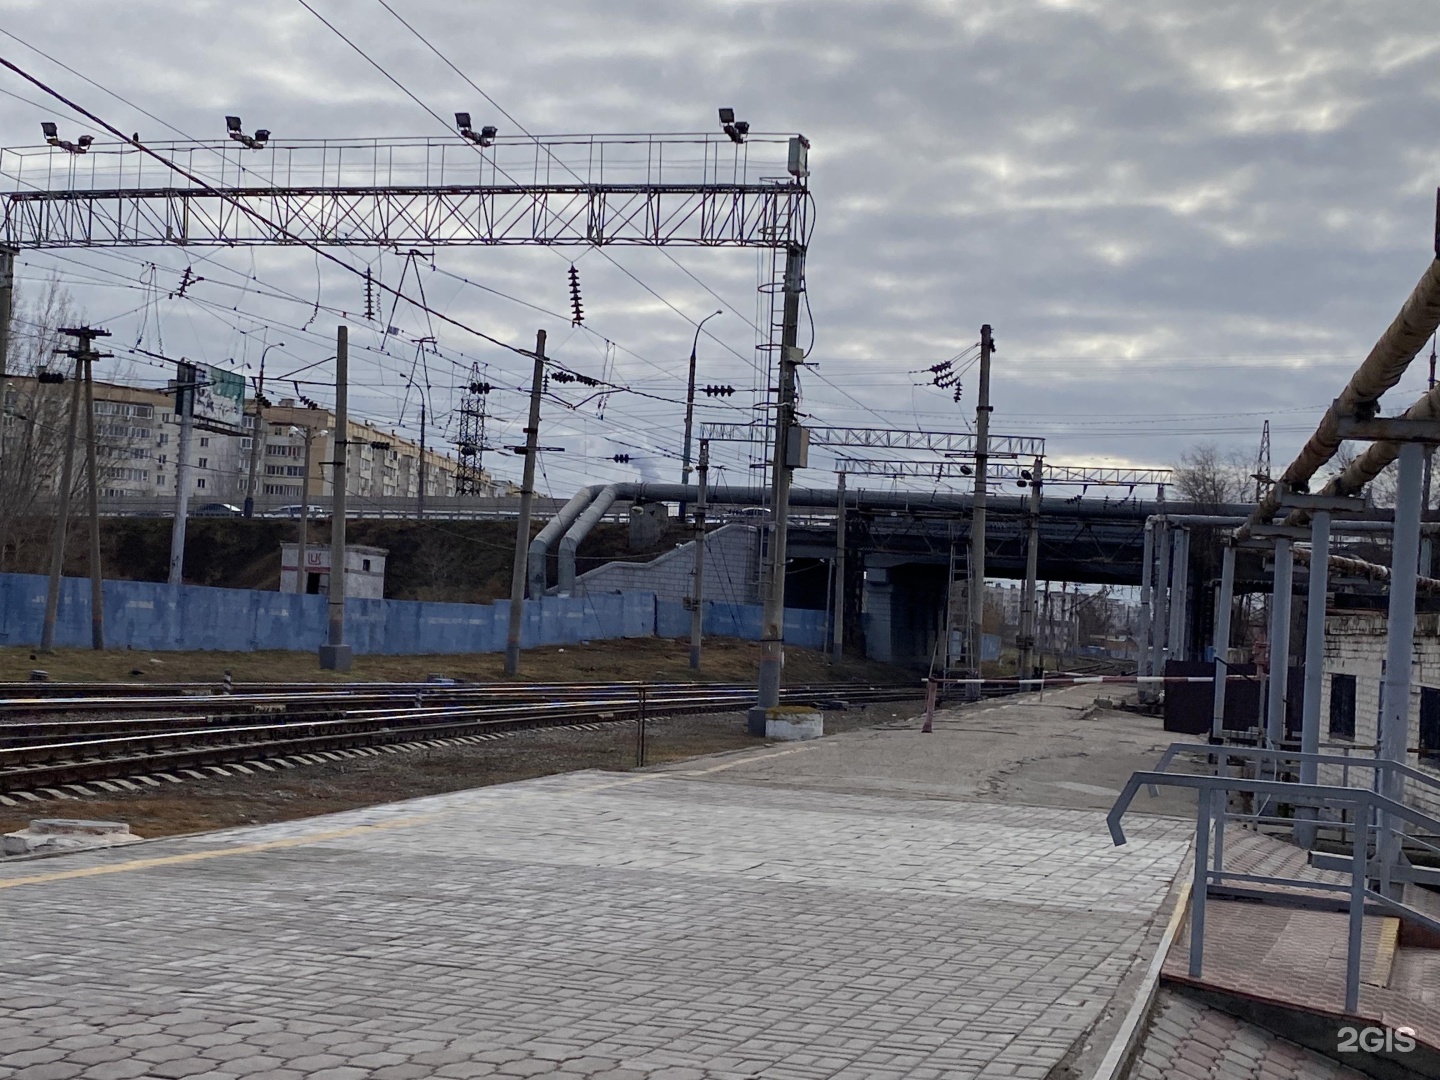 Жд астрахань телефон. Вокзальная 1 Астрахань. Железнодорожная станция Астрахань-2. Вокзал Астрахань. Вокзальная площадь 26 Астрахань.